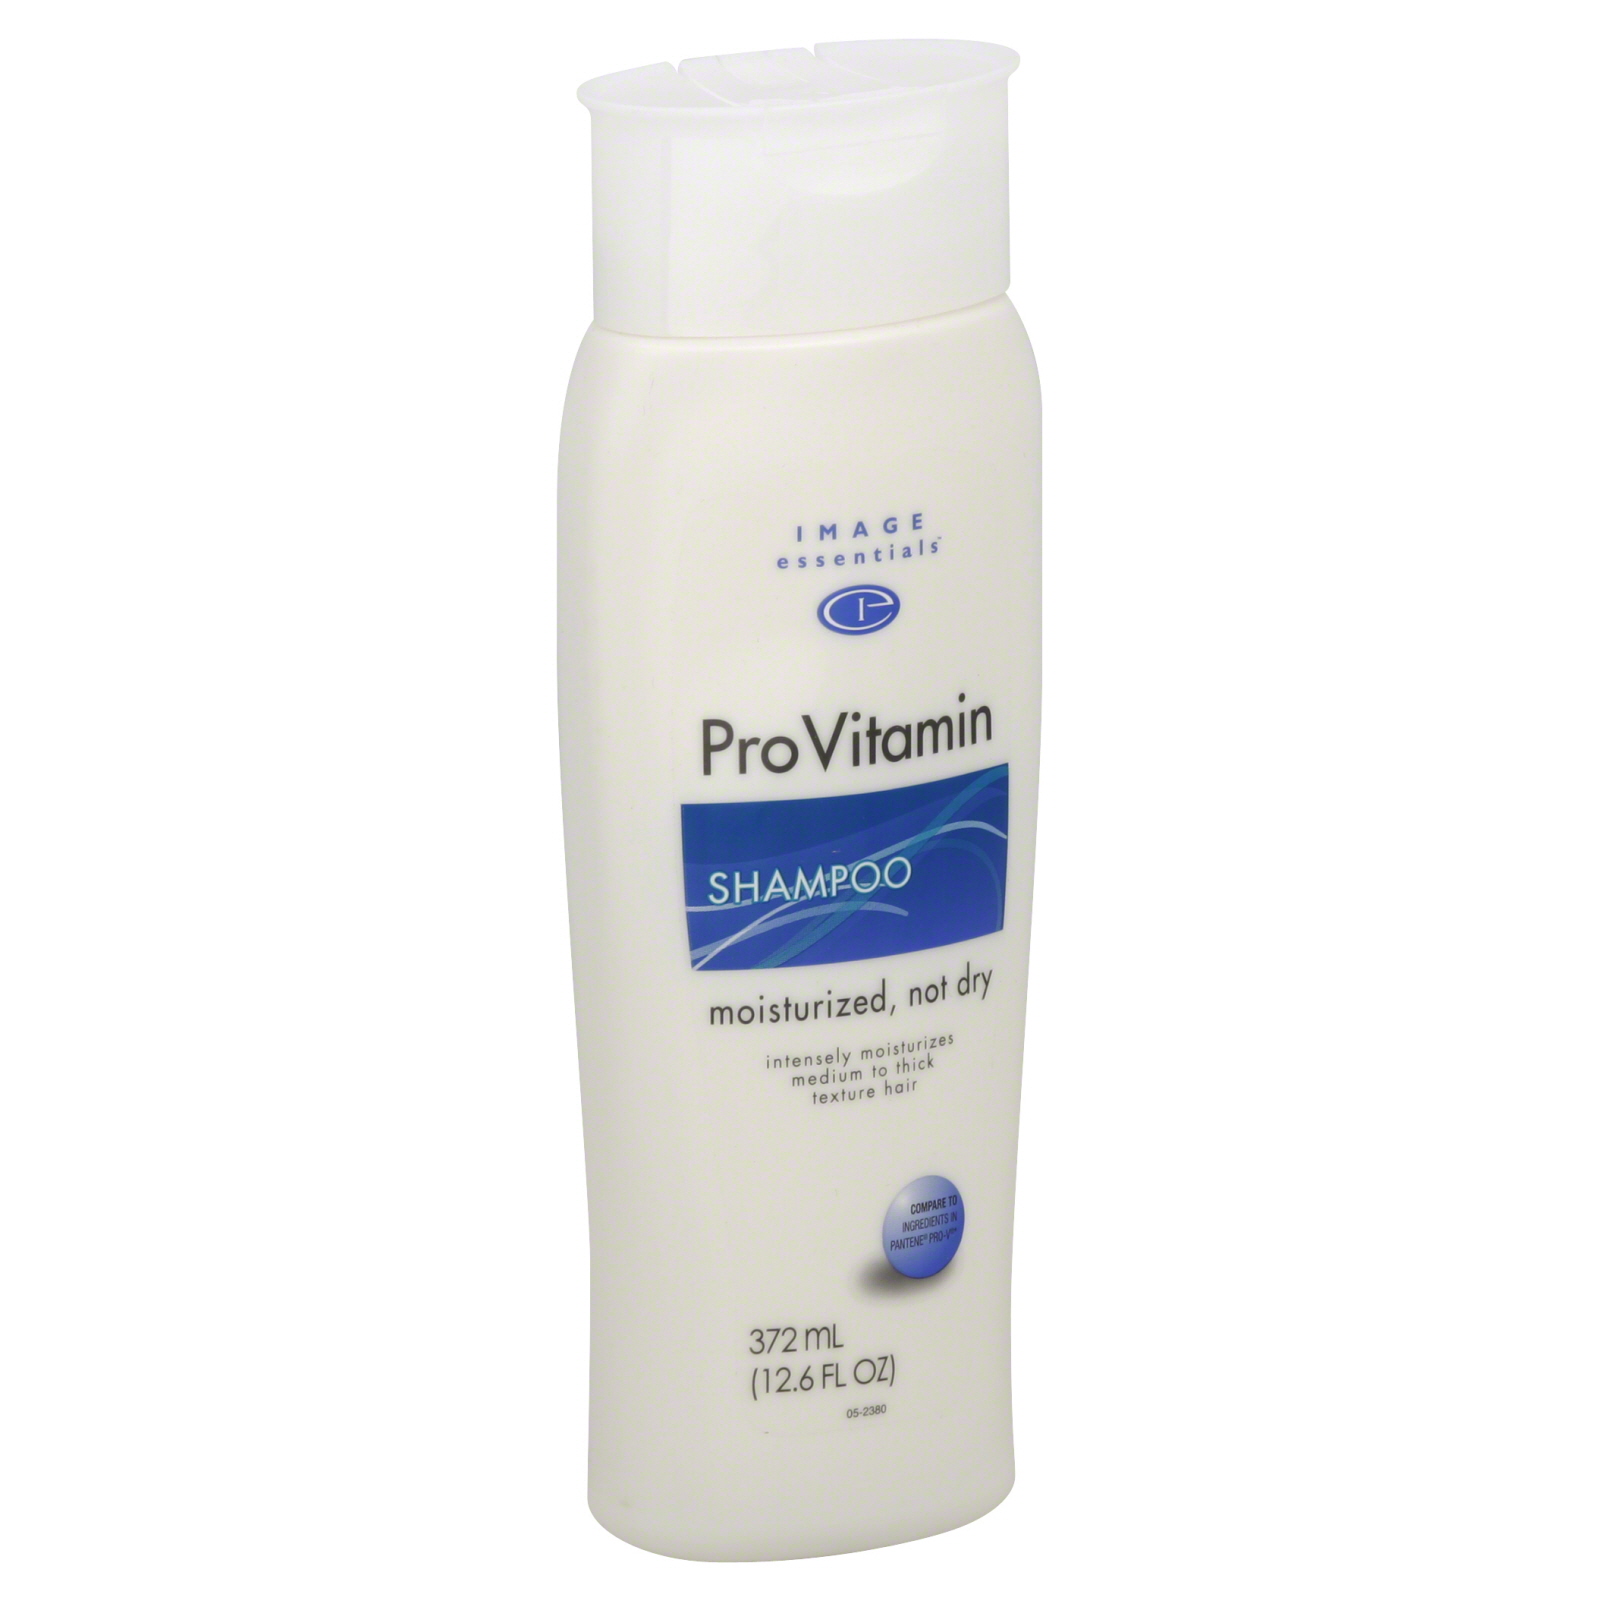 Image Essentials ProVitamin Shampoo, Moisturized, Not Dry 12.6 fl oz (372 ml)